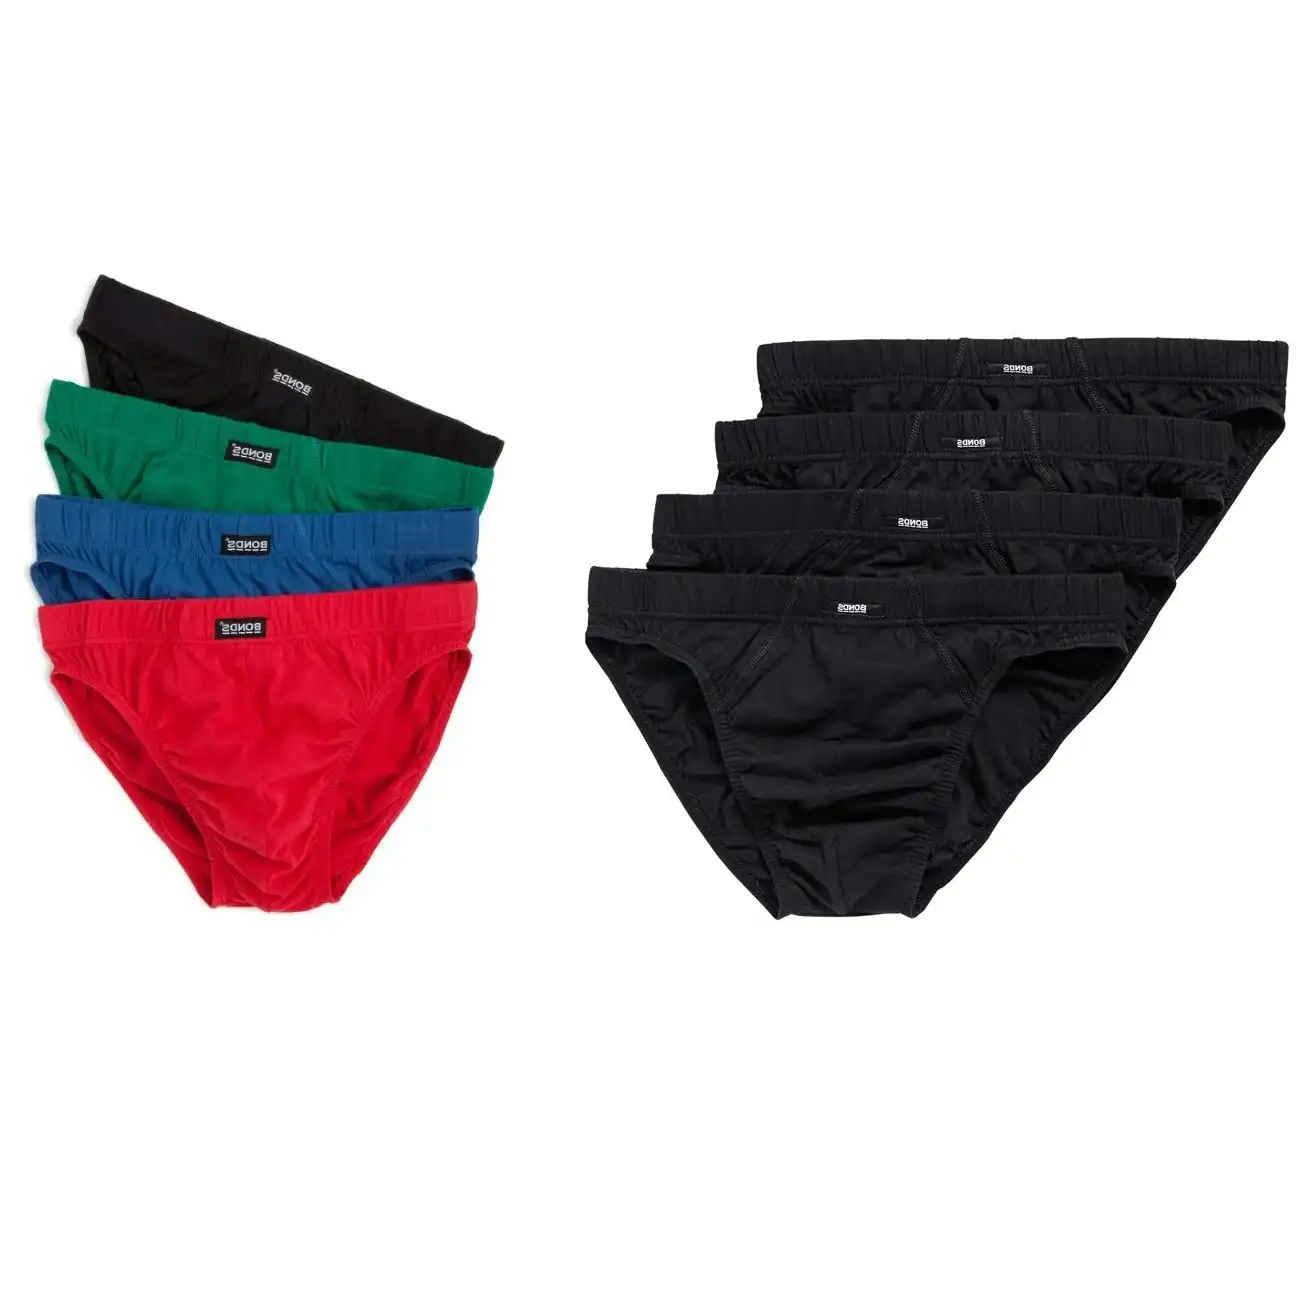 Bonds Mens 4 Pack Black Action Bikini Brief Underwear Jocks